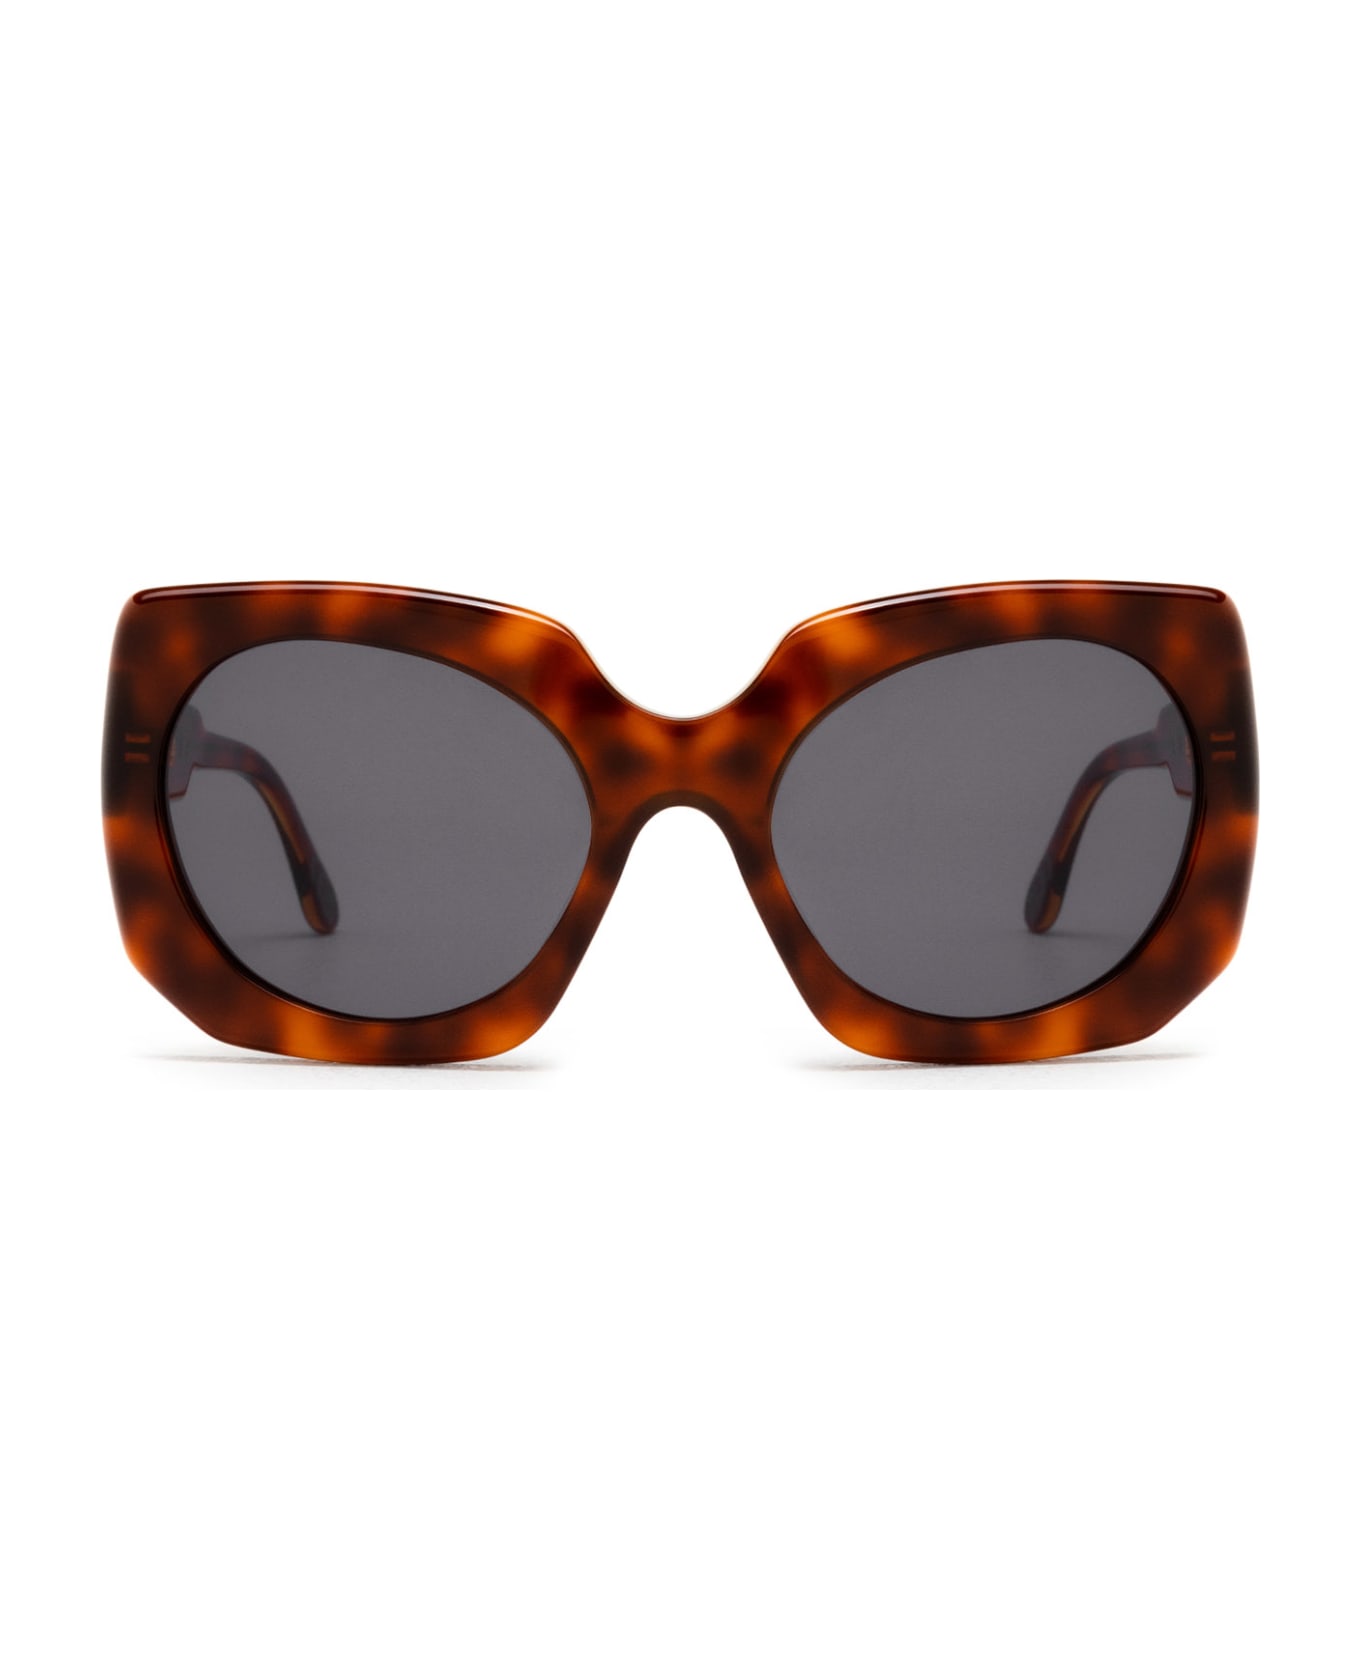 Marni Eyewear Jellyfish Lake Blonde Havana Sunglasses - Blonde Havana サングラス